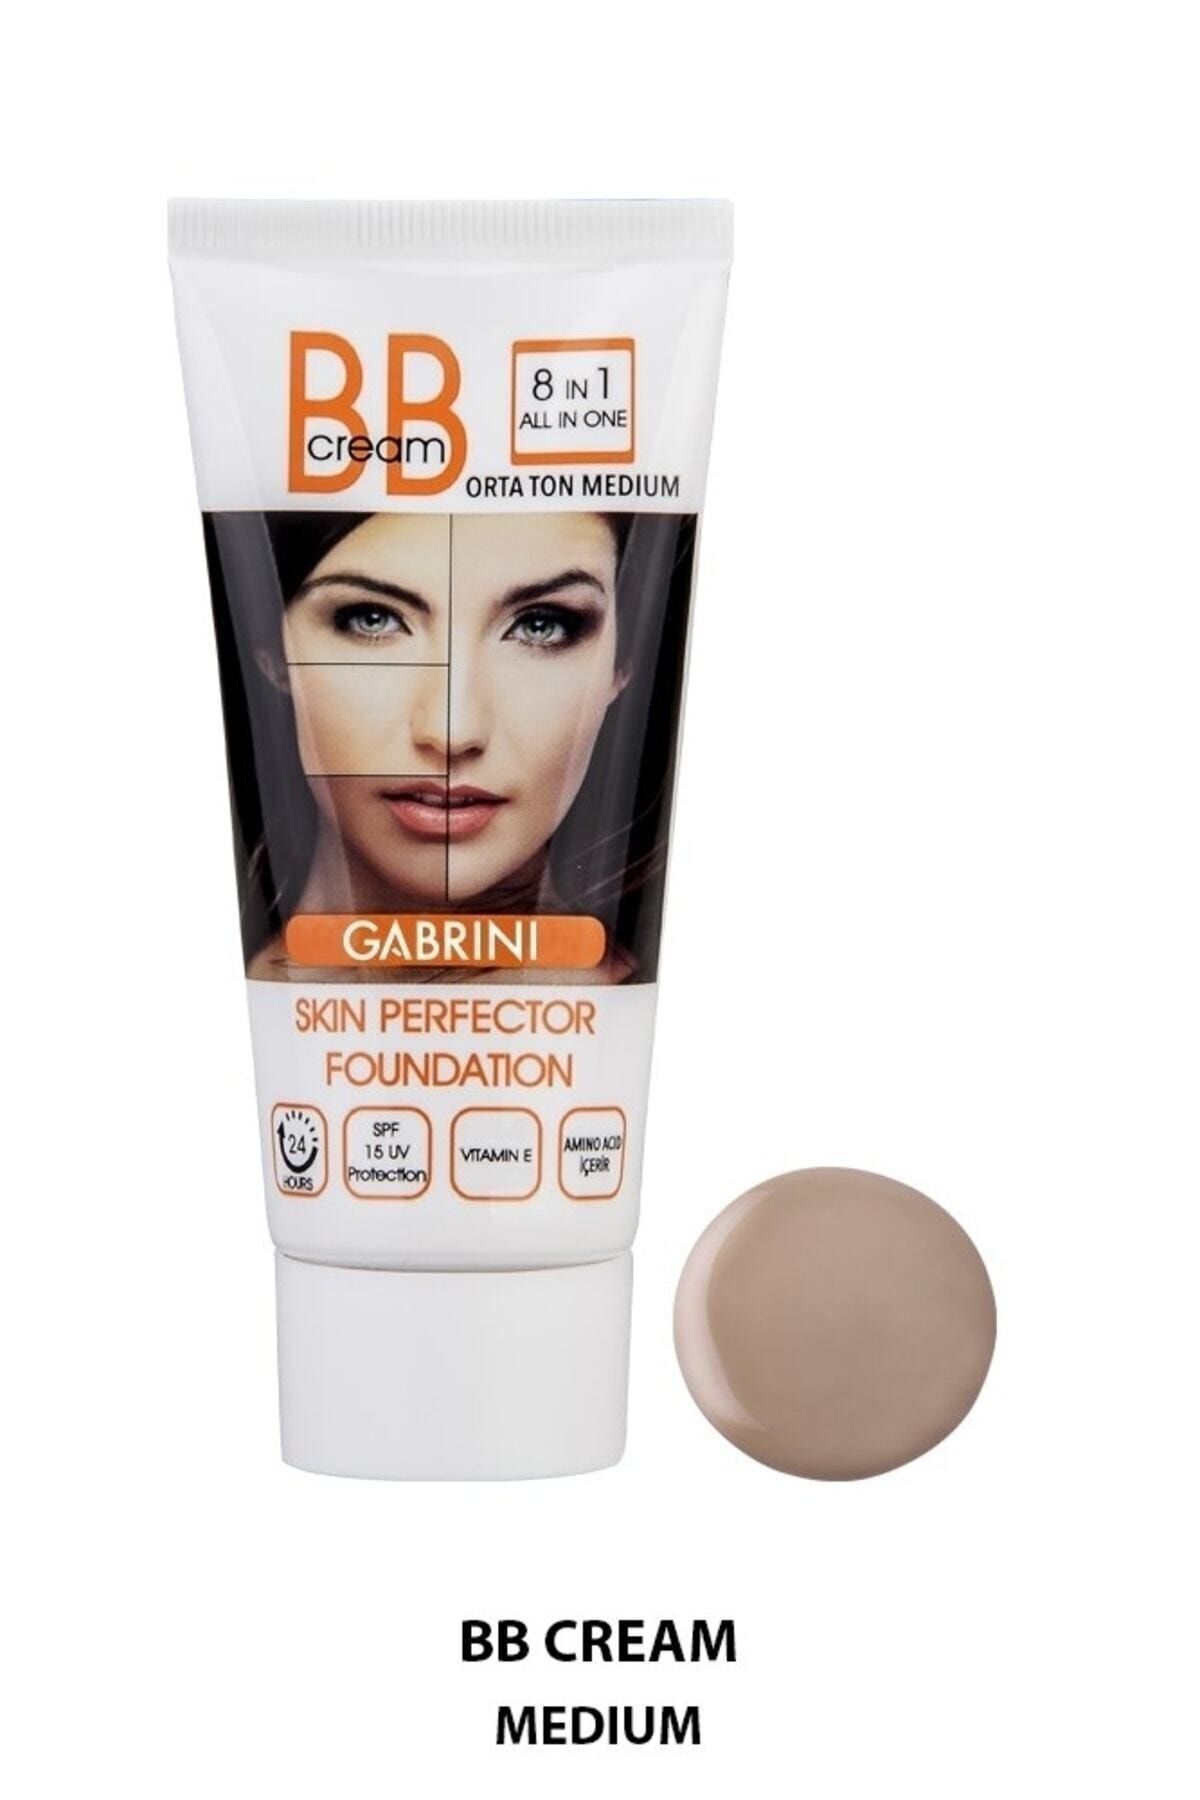 Gabrini Bb Cream 8 In 1 All In One Orta Ton Medium